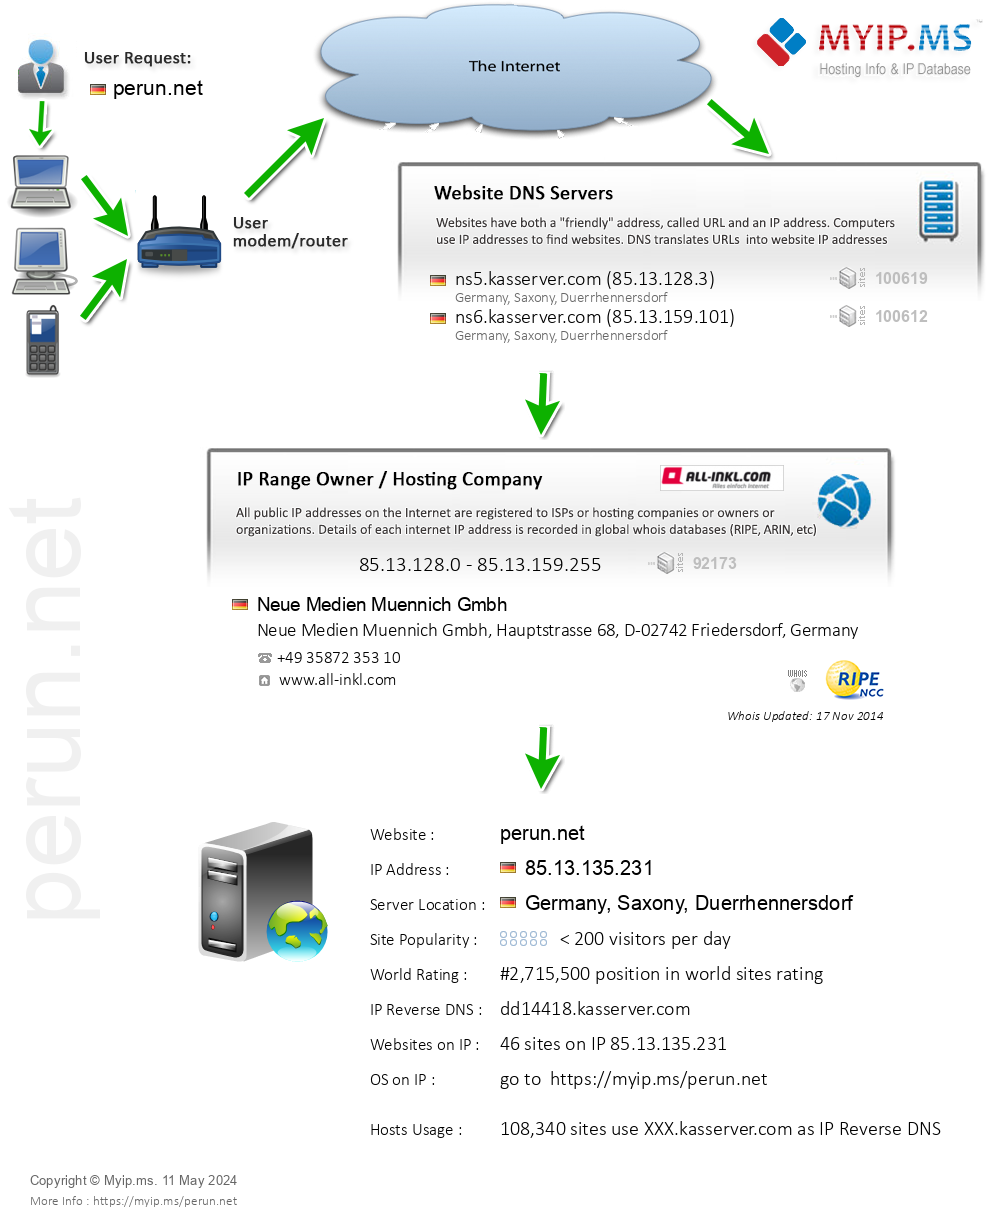 Perun.net - Website Hosting Visual IP Diagram